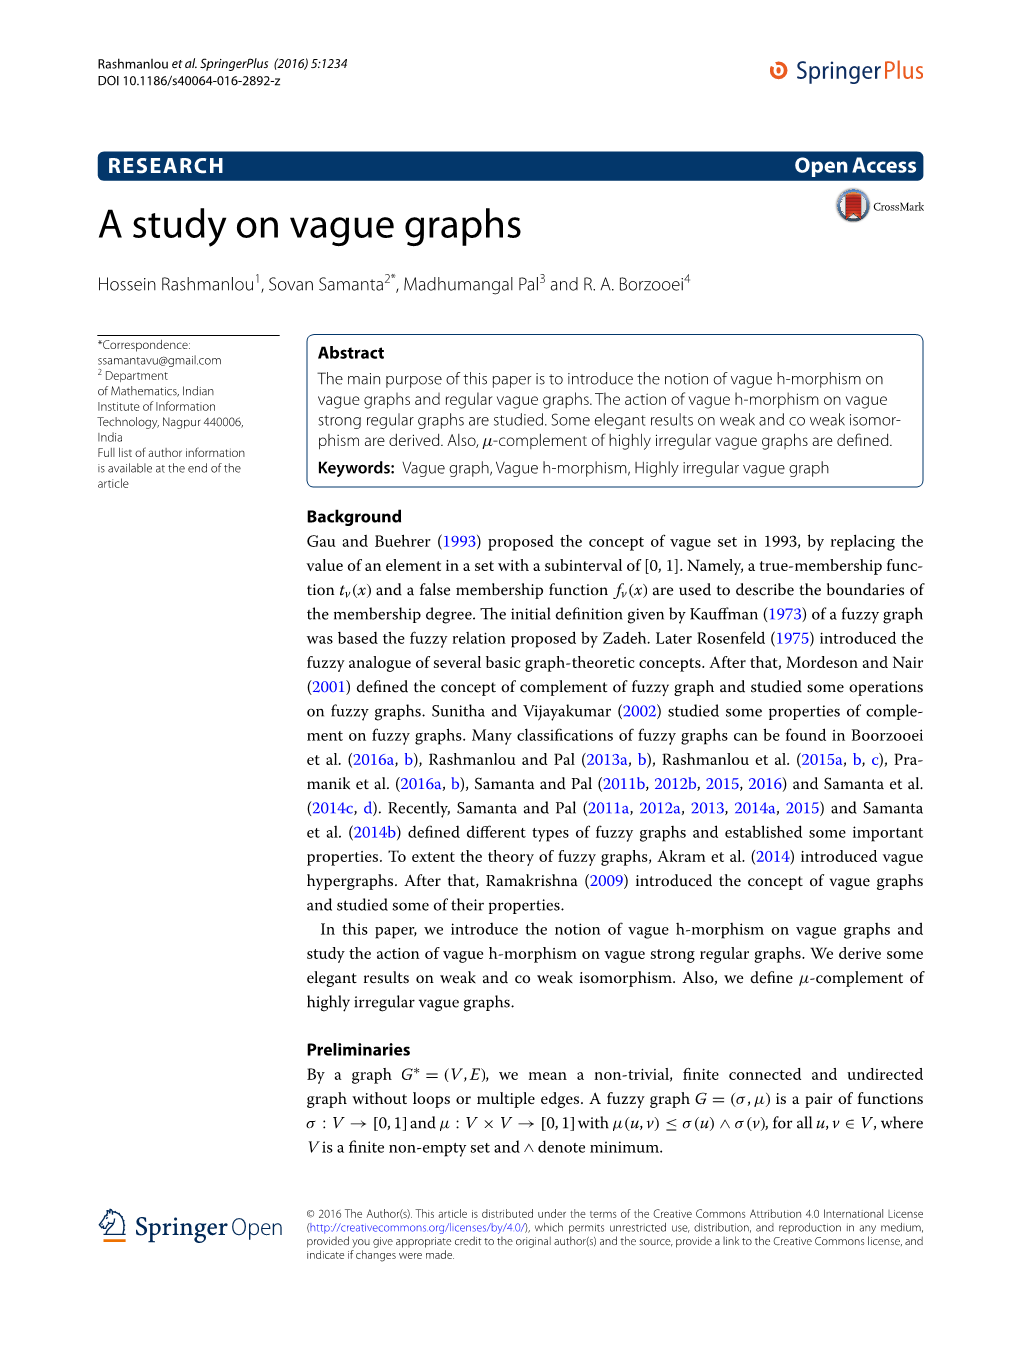 A Study on Vague Graphs